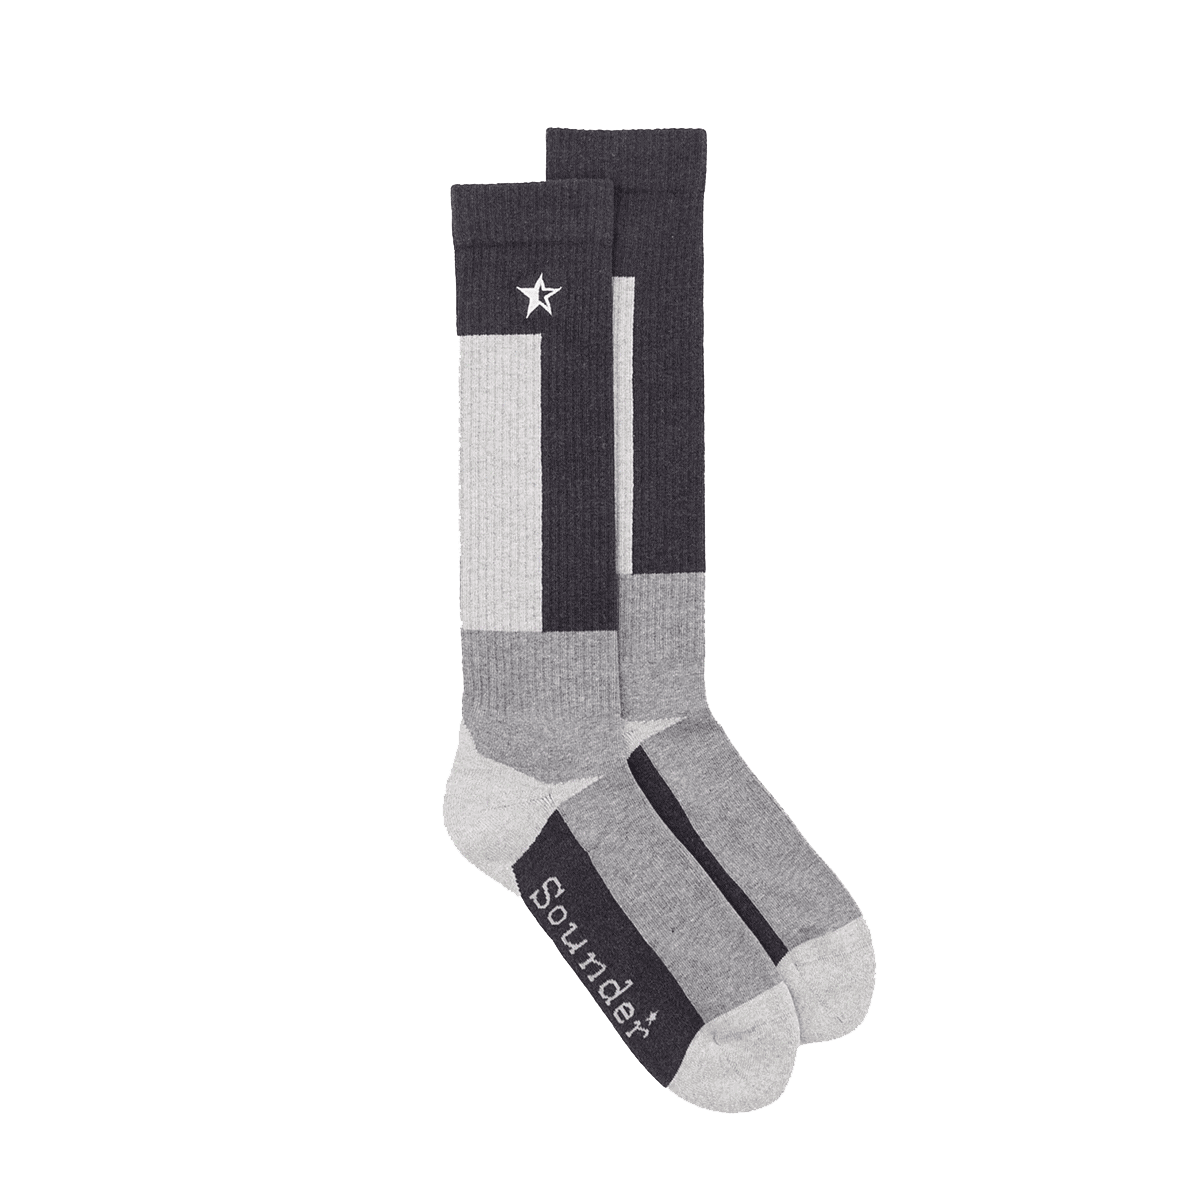 Sounder Marl long sock review